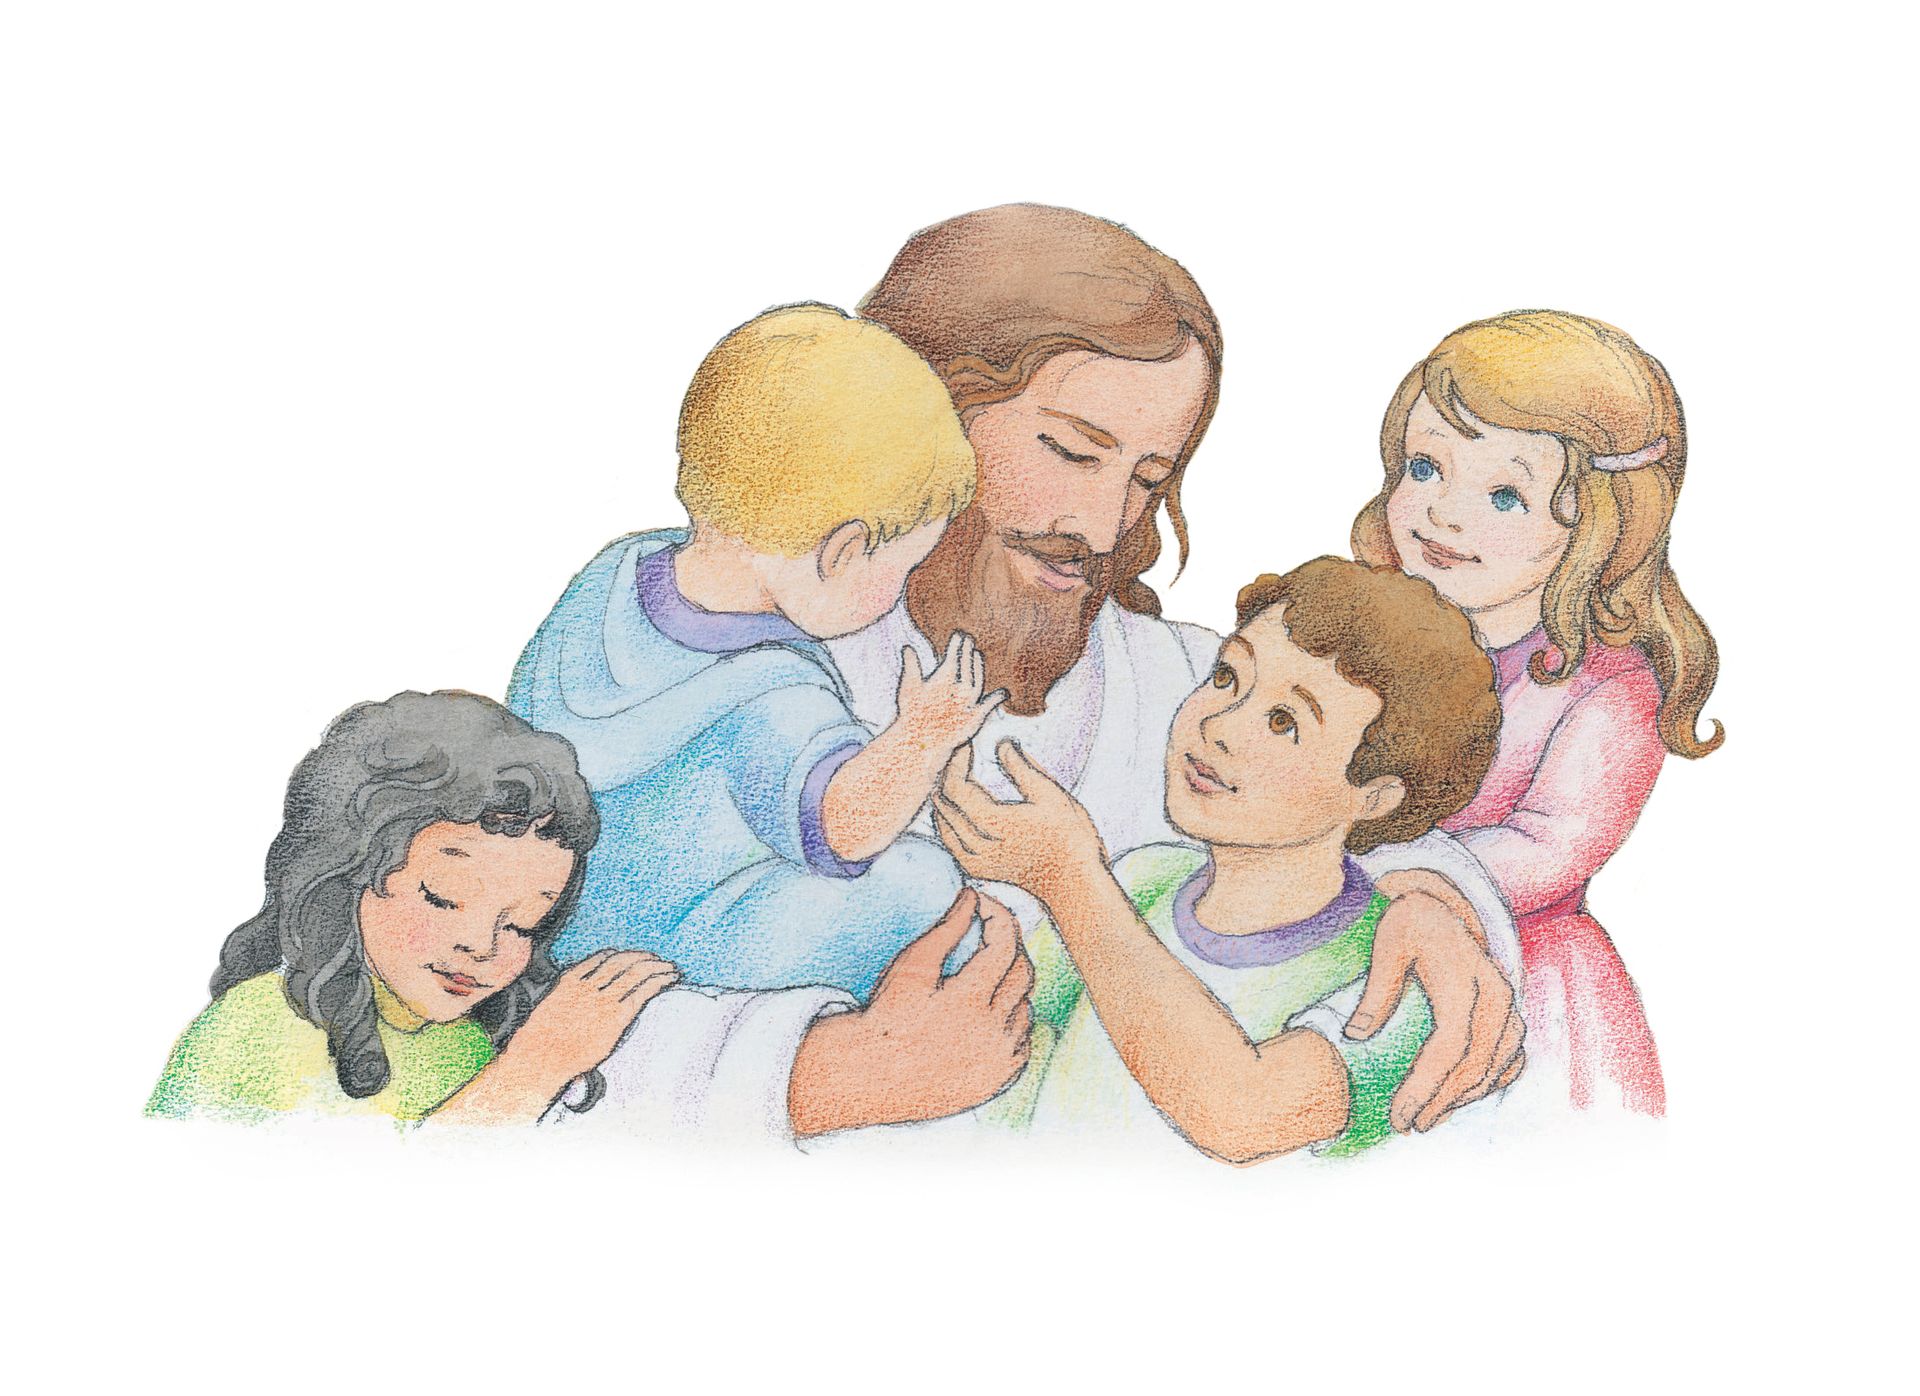 jesus christ with children clipart